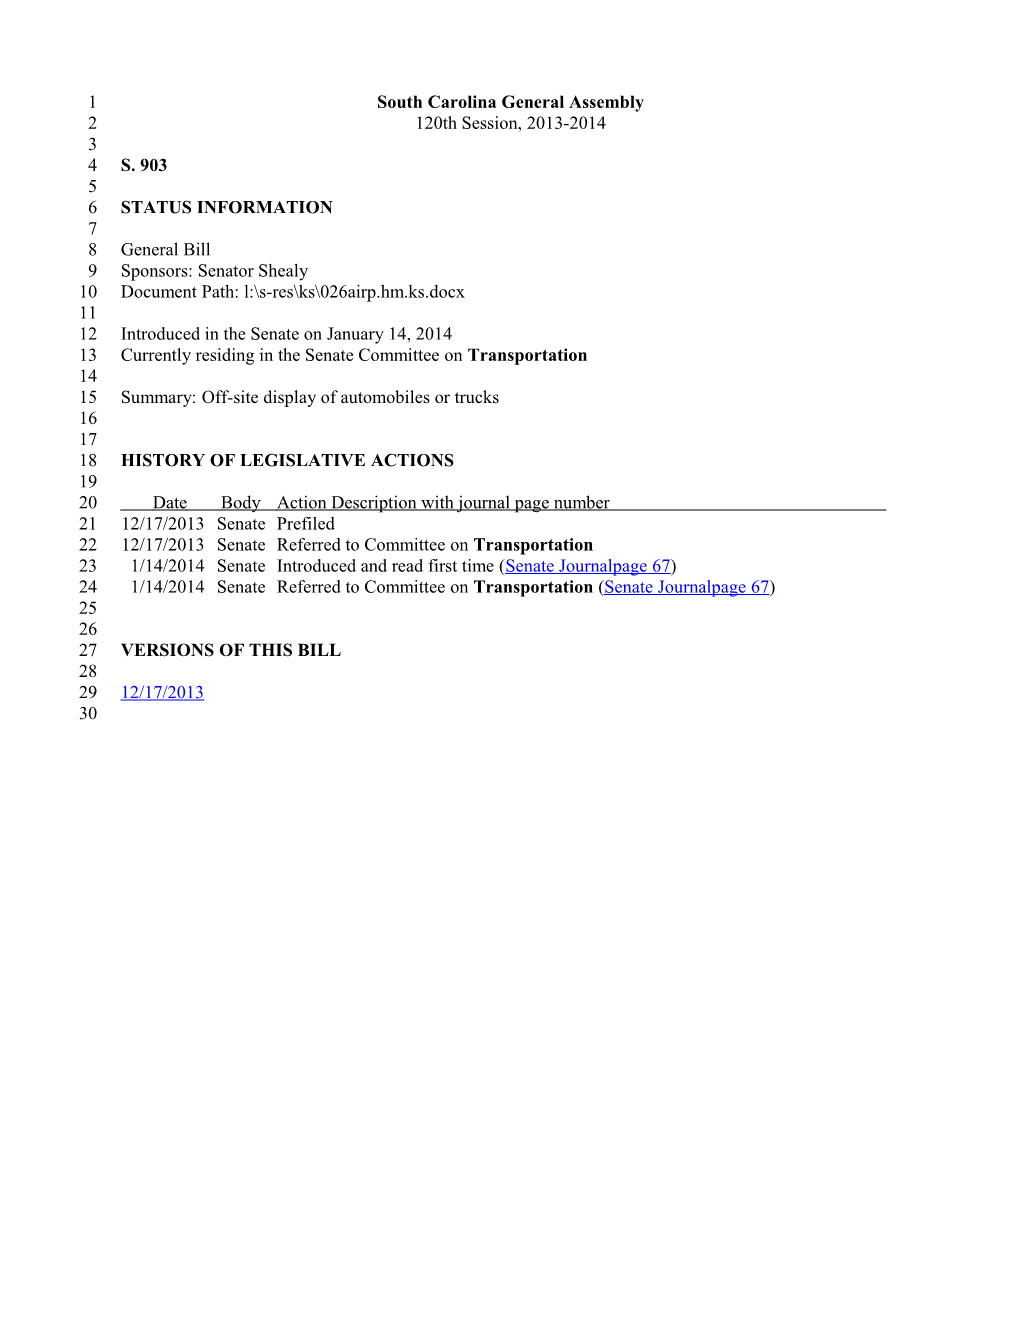 2013-2014 Bill 903: Off-Site Display of Automobiles Or Trucks - South Carolina Legislature